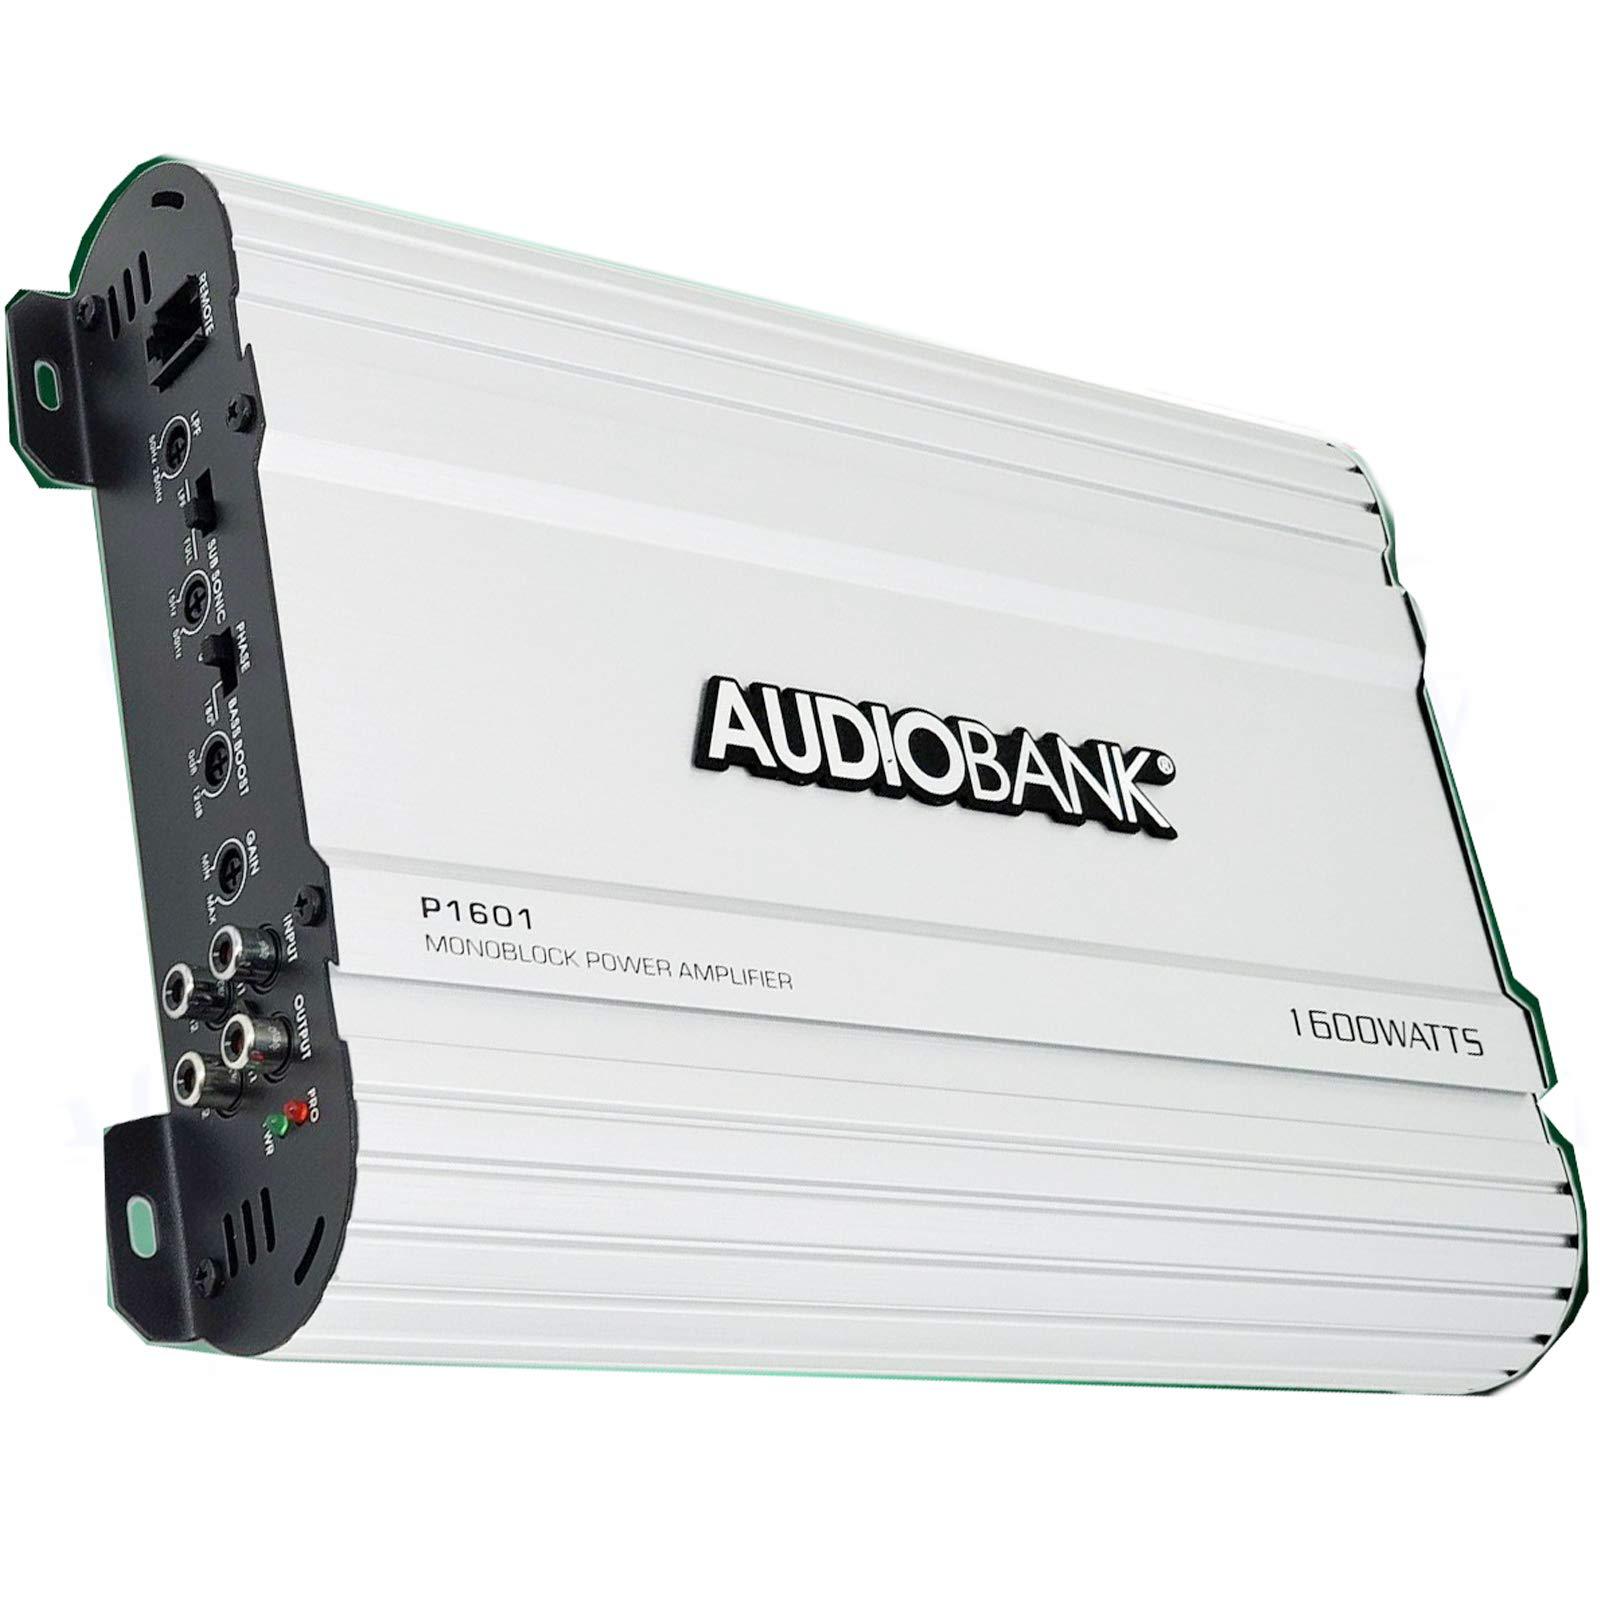 audiobank monoblock 1600 watts amp class ab car audio stereo amplifier p1601 heavy-duty aluminum alloy heatsink, class a-b op